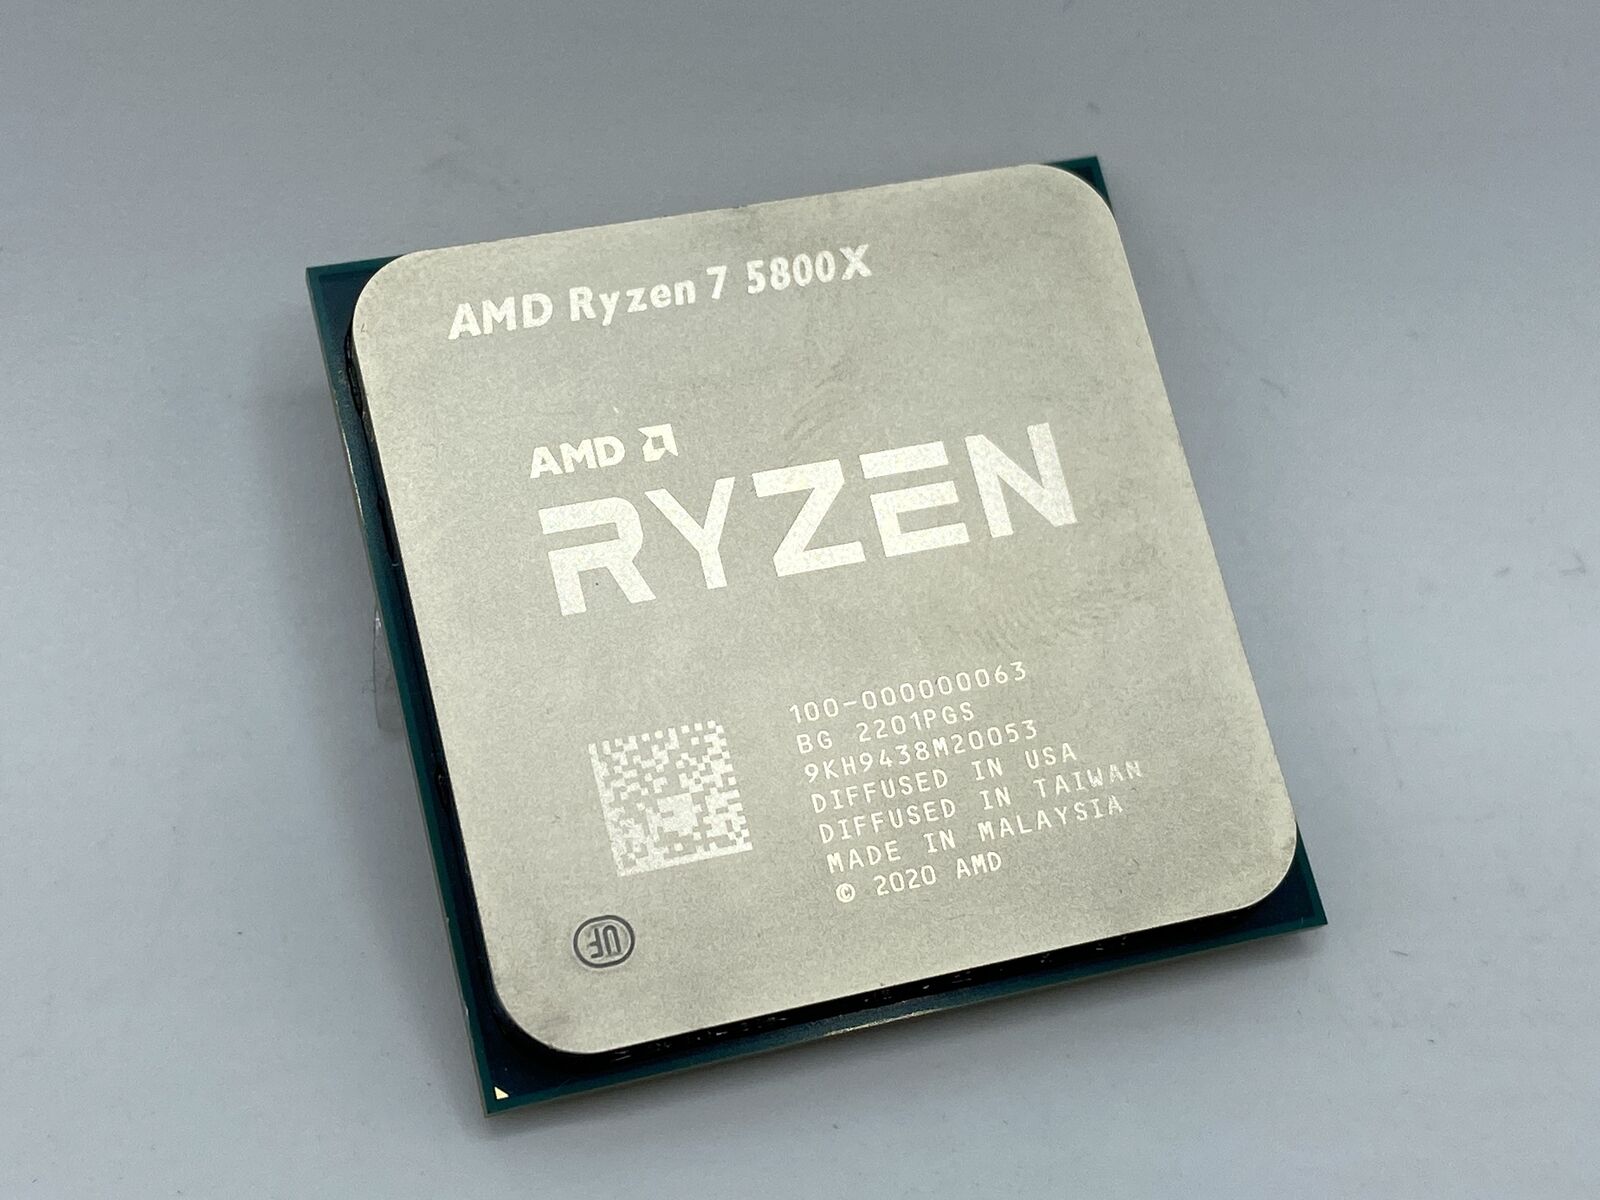 AMD Ryzen 7 5800X AM4 3.8GHz 8 Core 16 Thread Desktop Processor Used